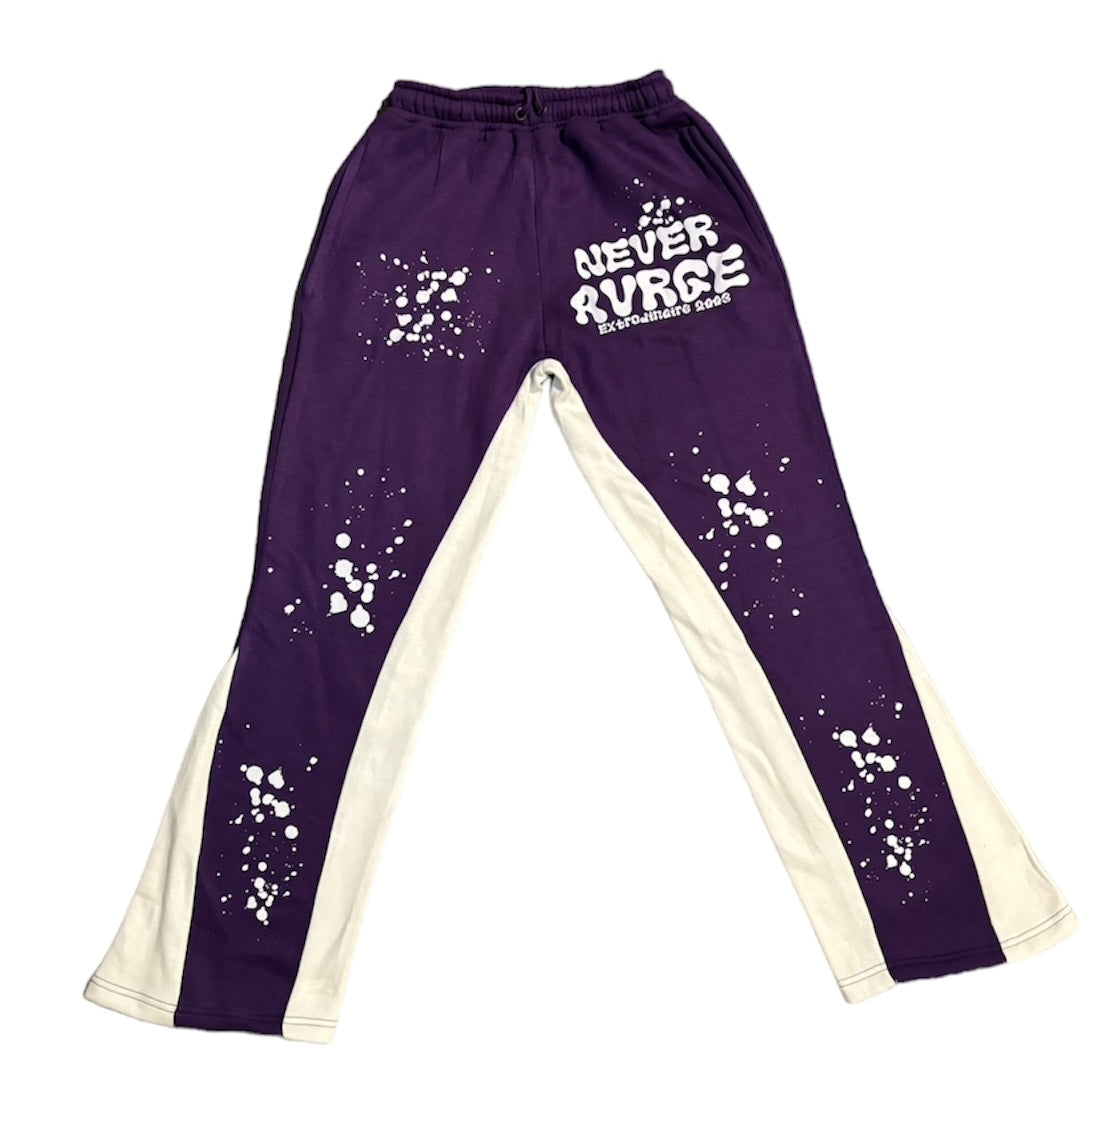 Midnight Purple Applique Embroidery Sweatsuit